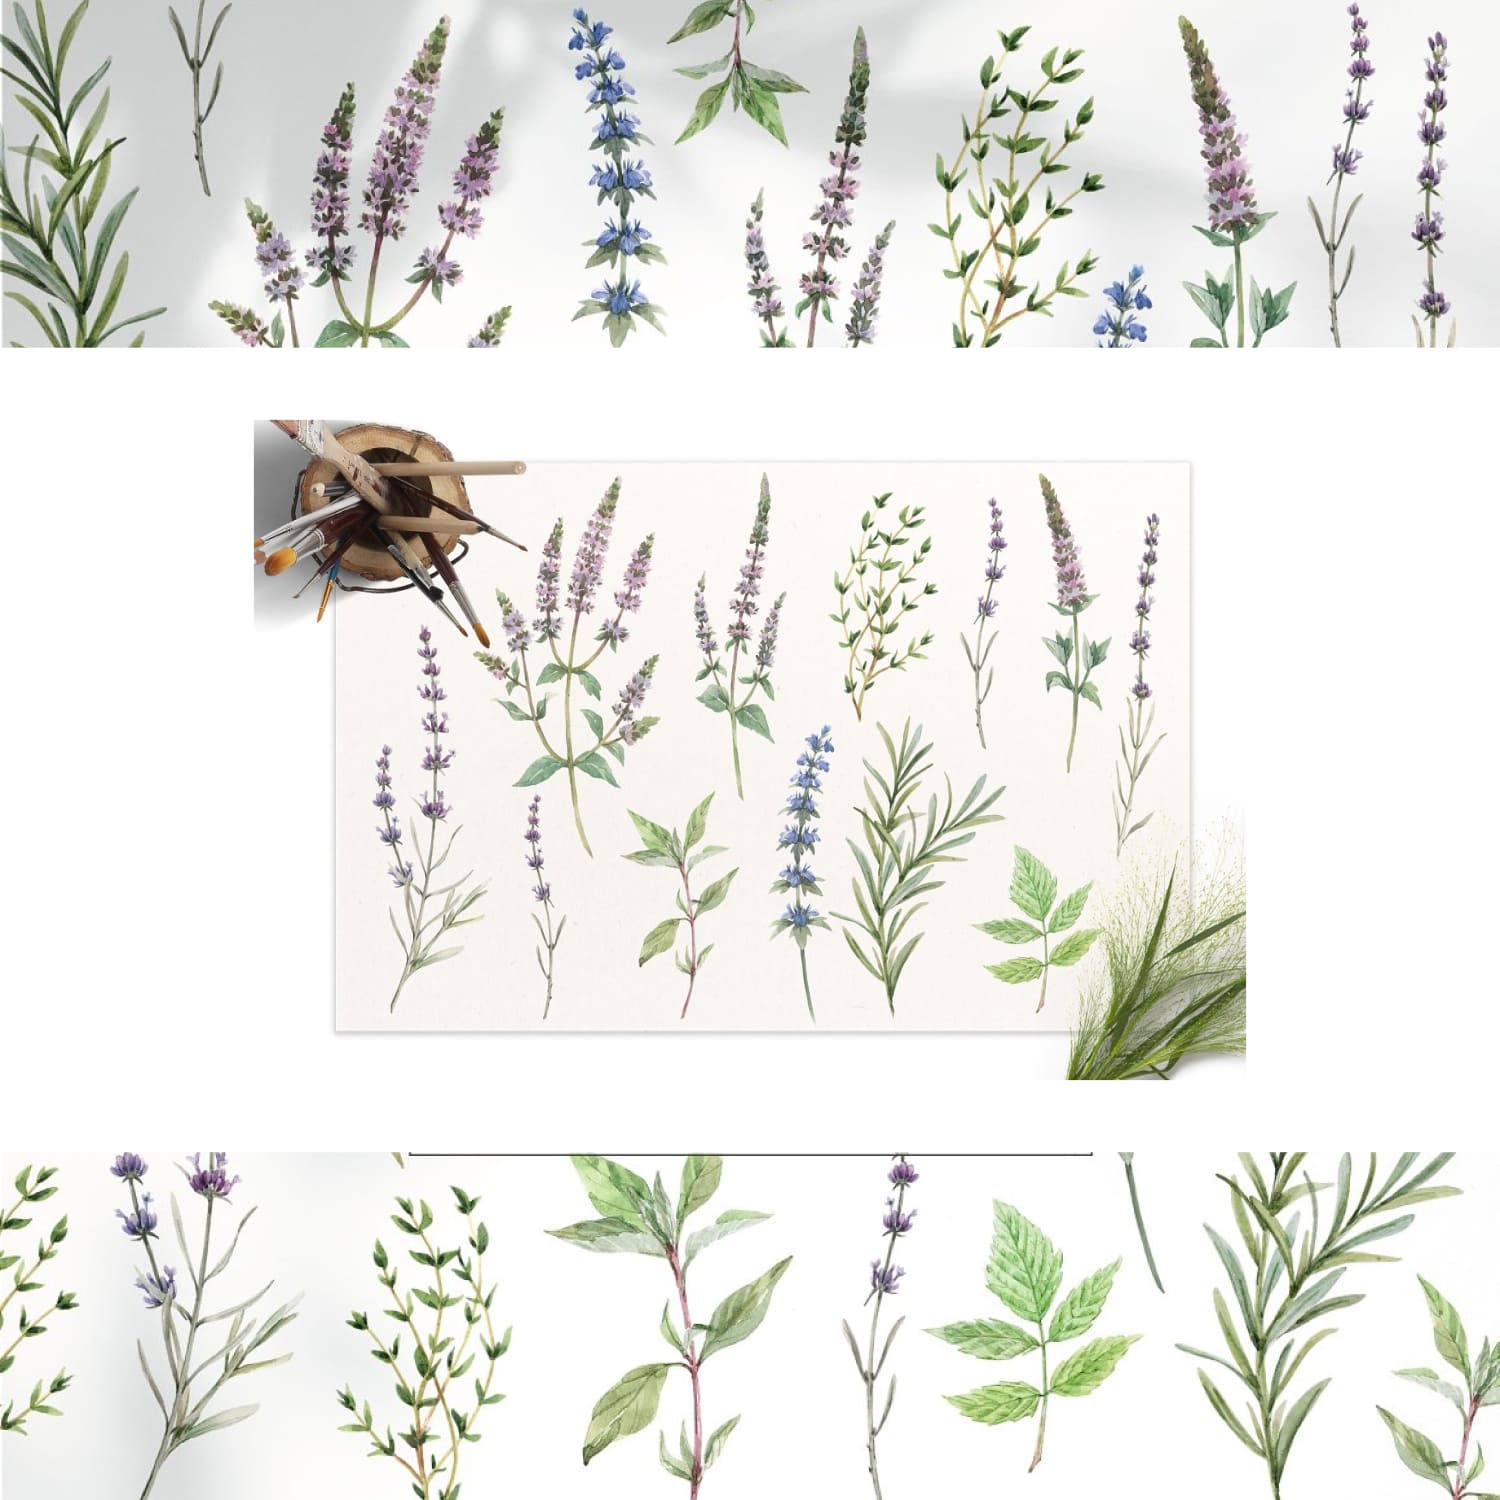 fragrant herbs set.watercolor flower illustrations.